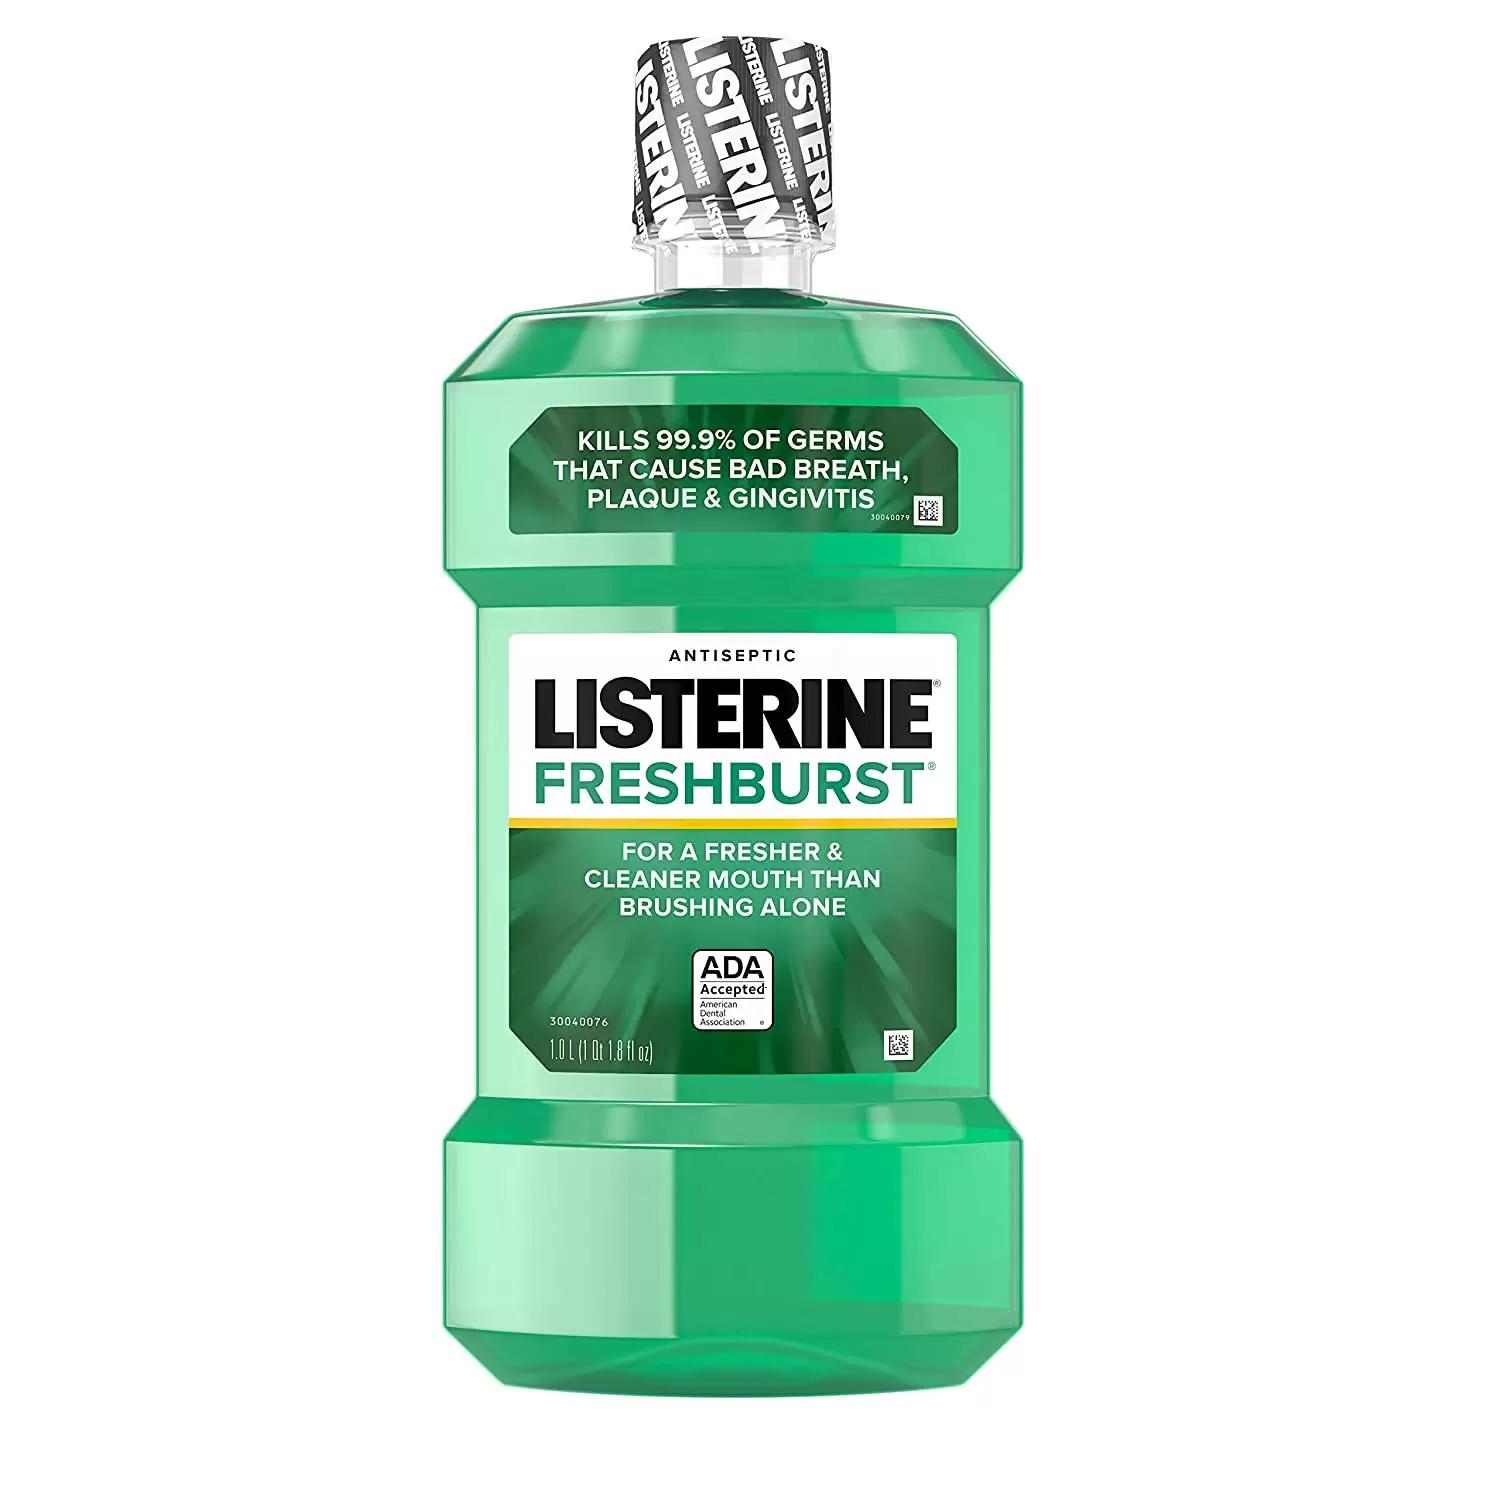 Listerine Antiseptic Mouthwash for $3.76 Shipped